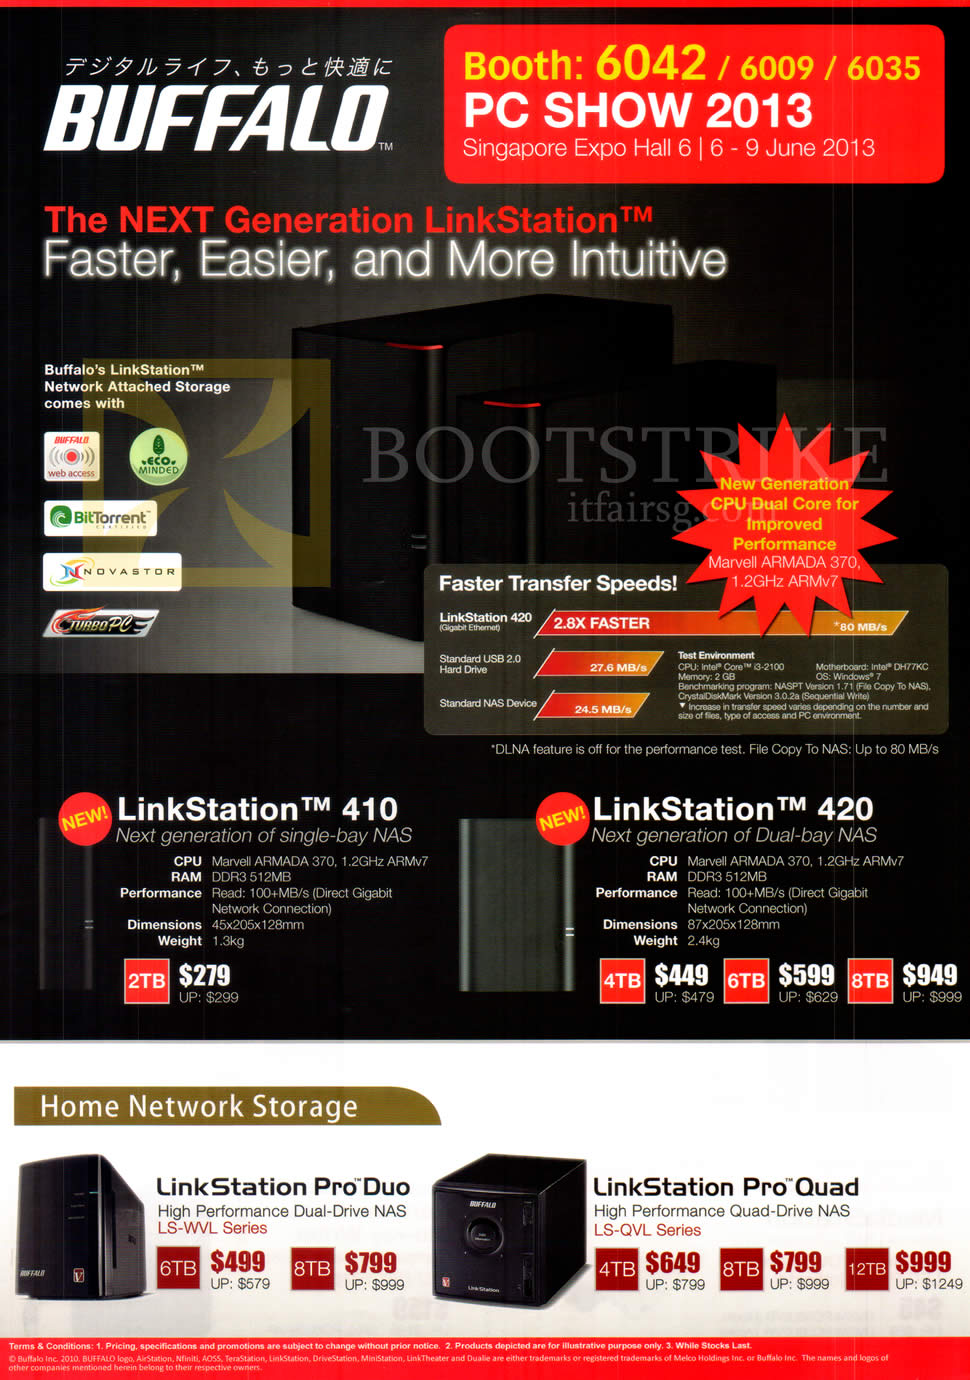 PC SHOW 2013 price list image brochure of Buffalo NAS LinkStation 410, 420, Pro Duo, Pro Quad